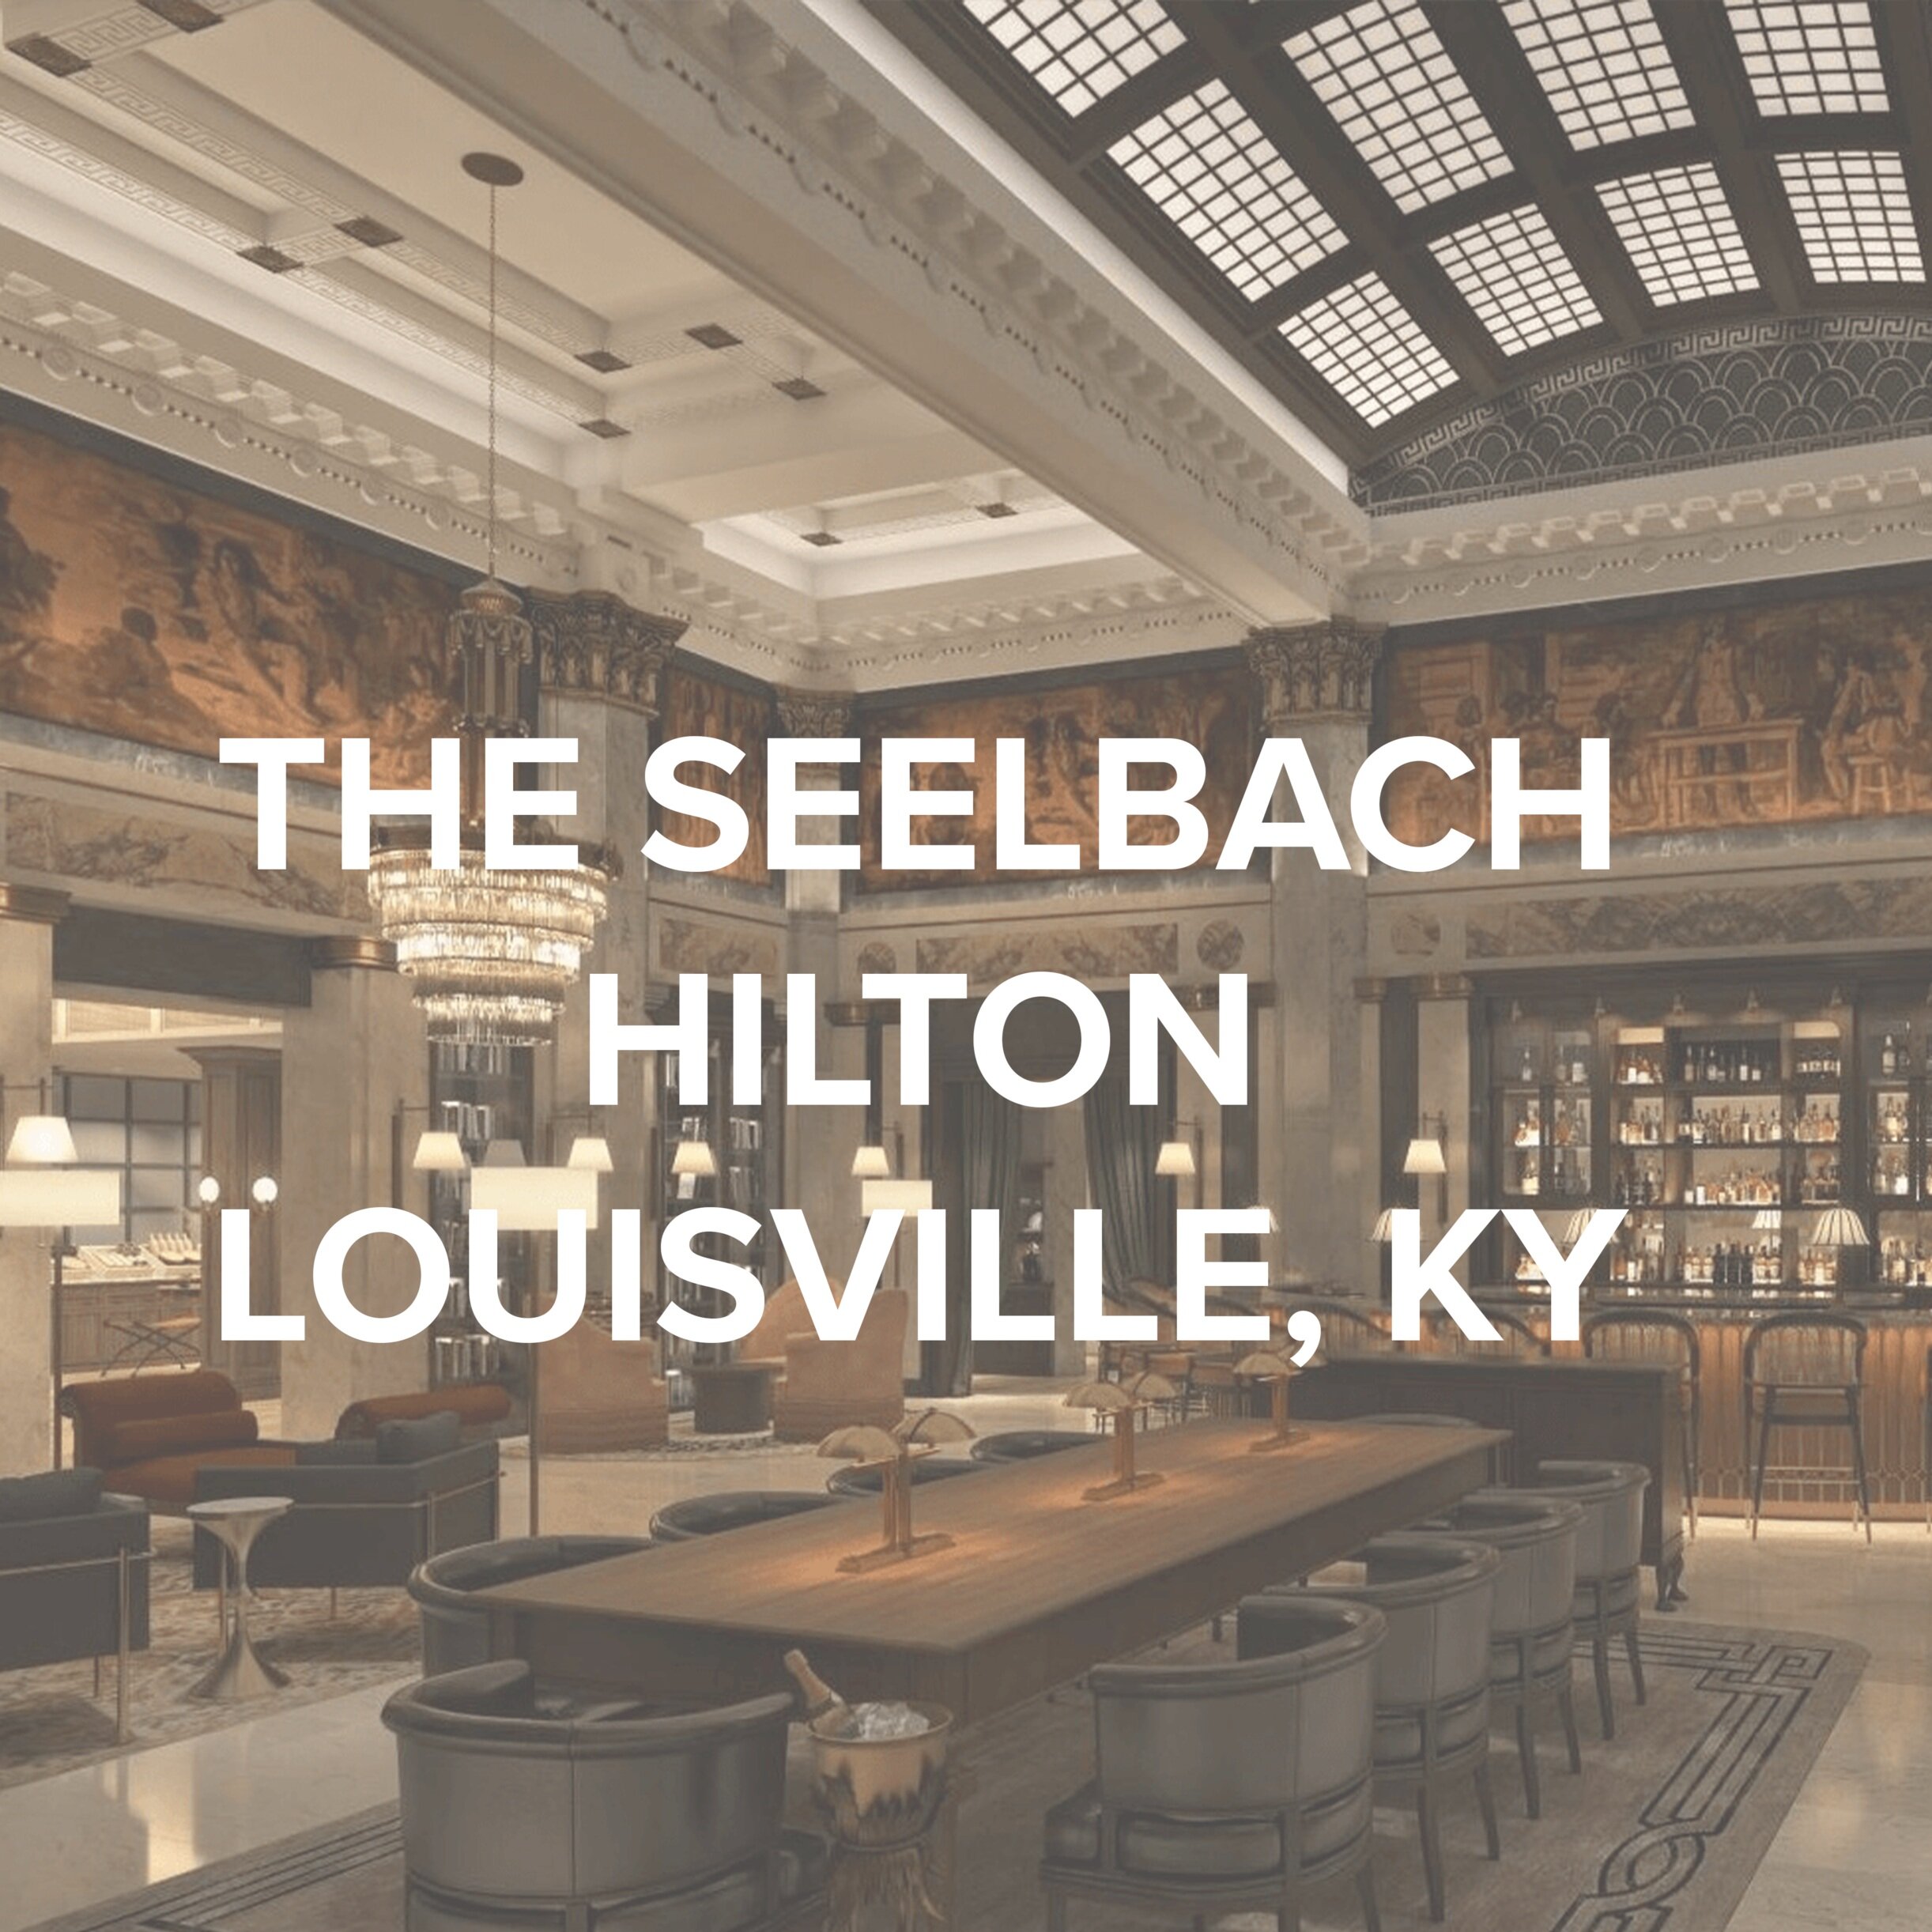 THE SEELBACH HOTEL | LOUISVILLE, KY